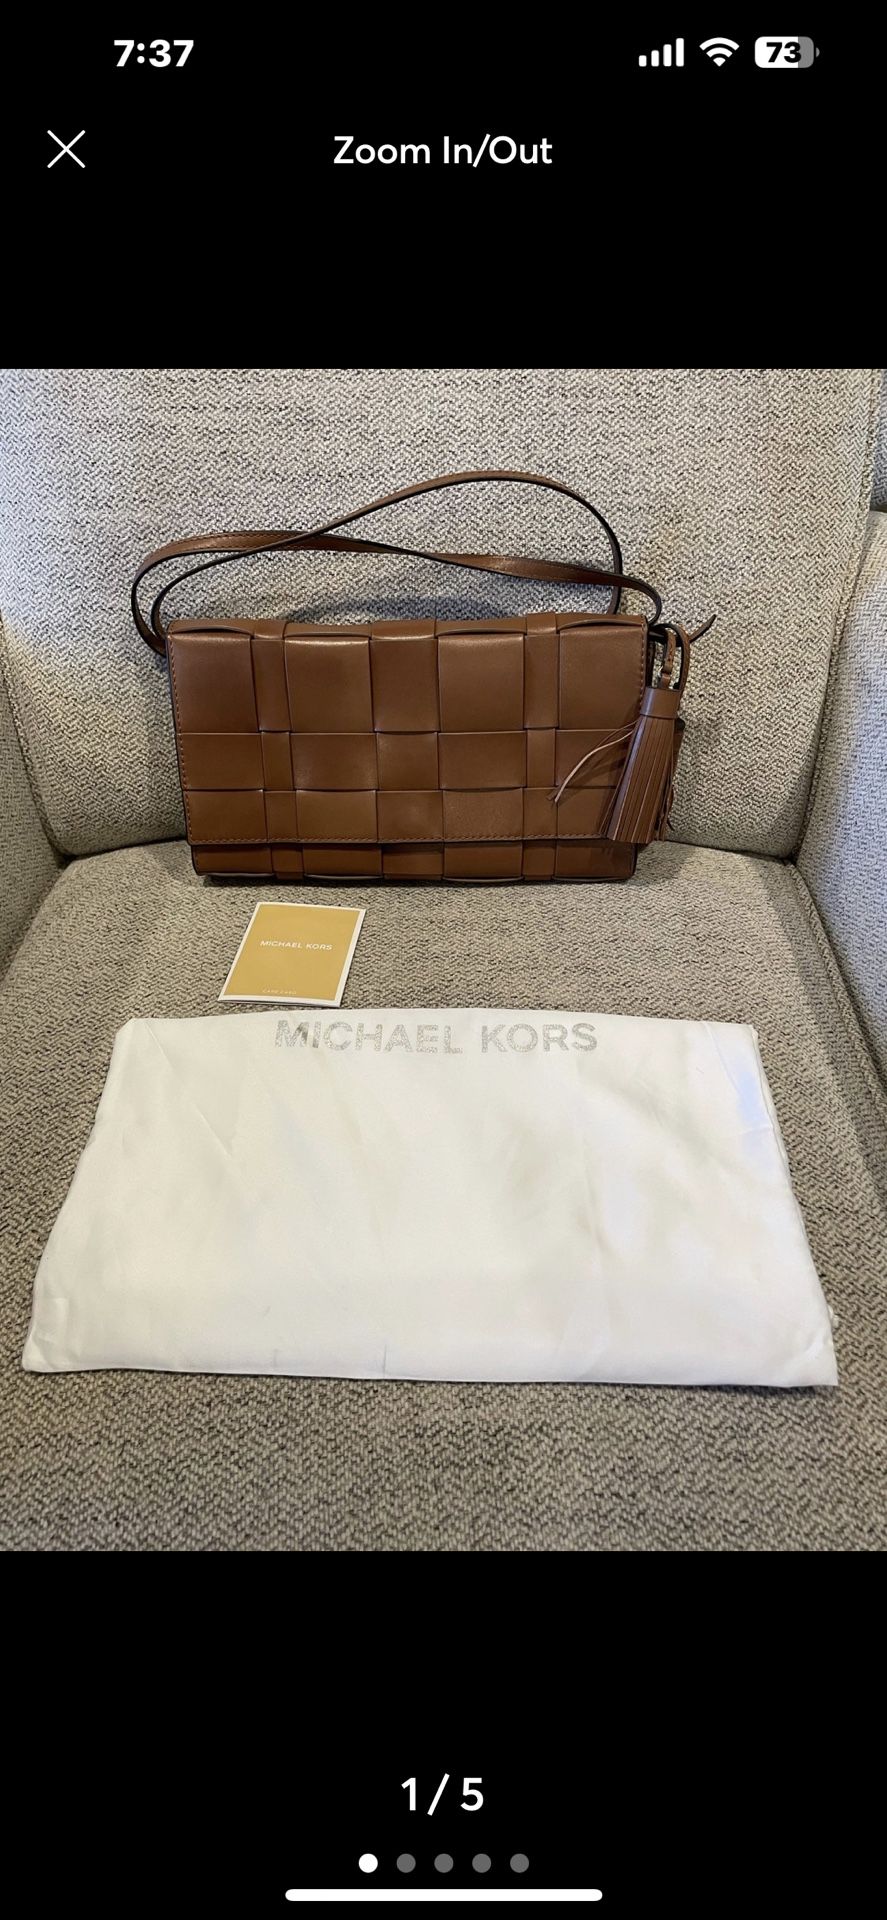 Michael kors crossbody bag and clutch